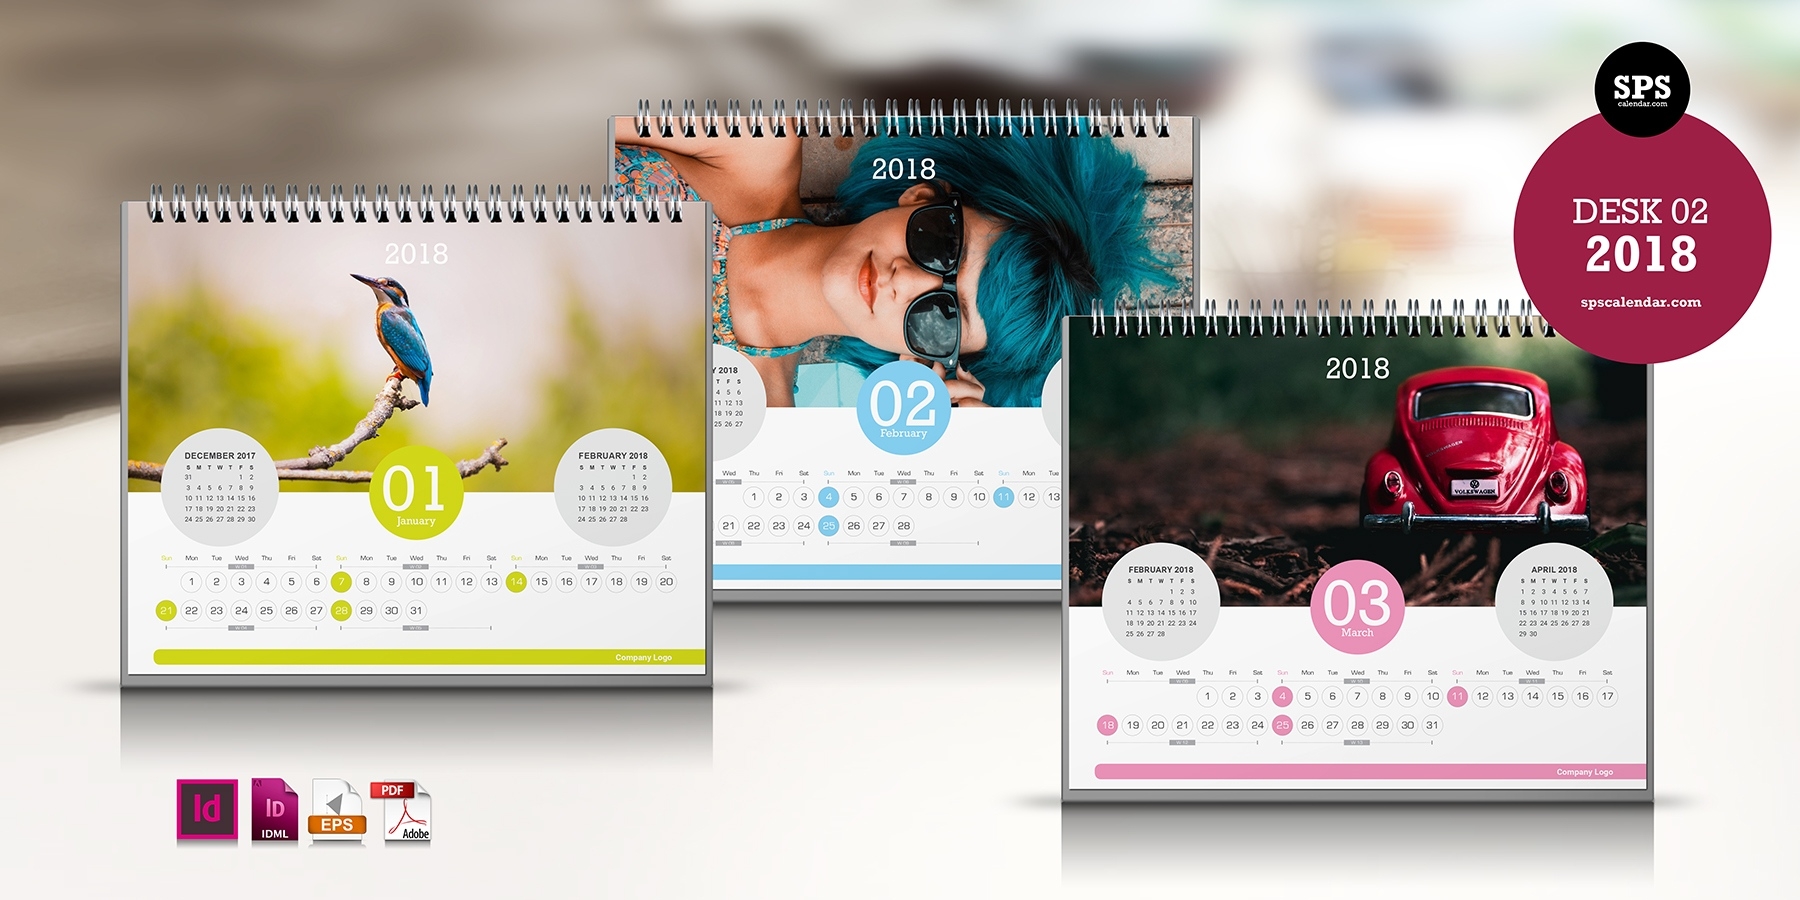 Free 2018 Indesign Calendar Template - Spscalendar Calendar Template For Indesign